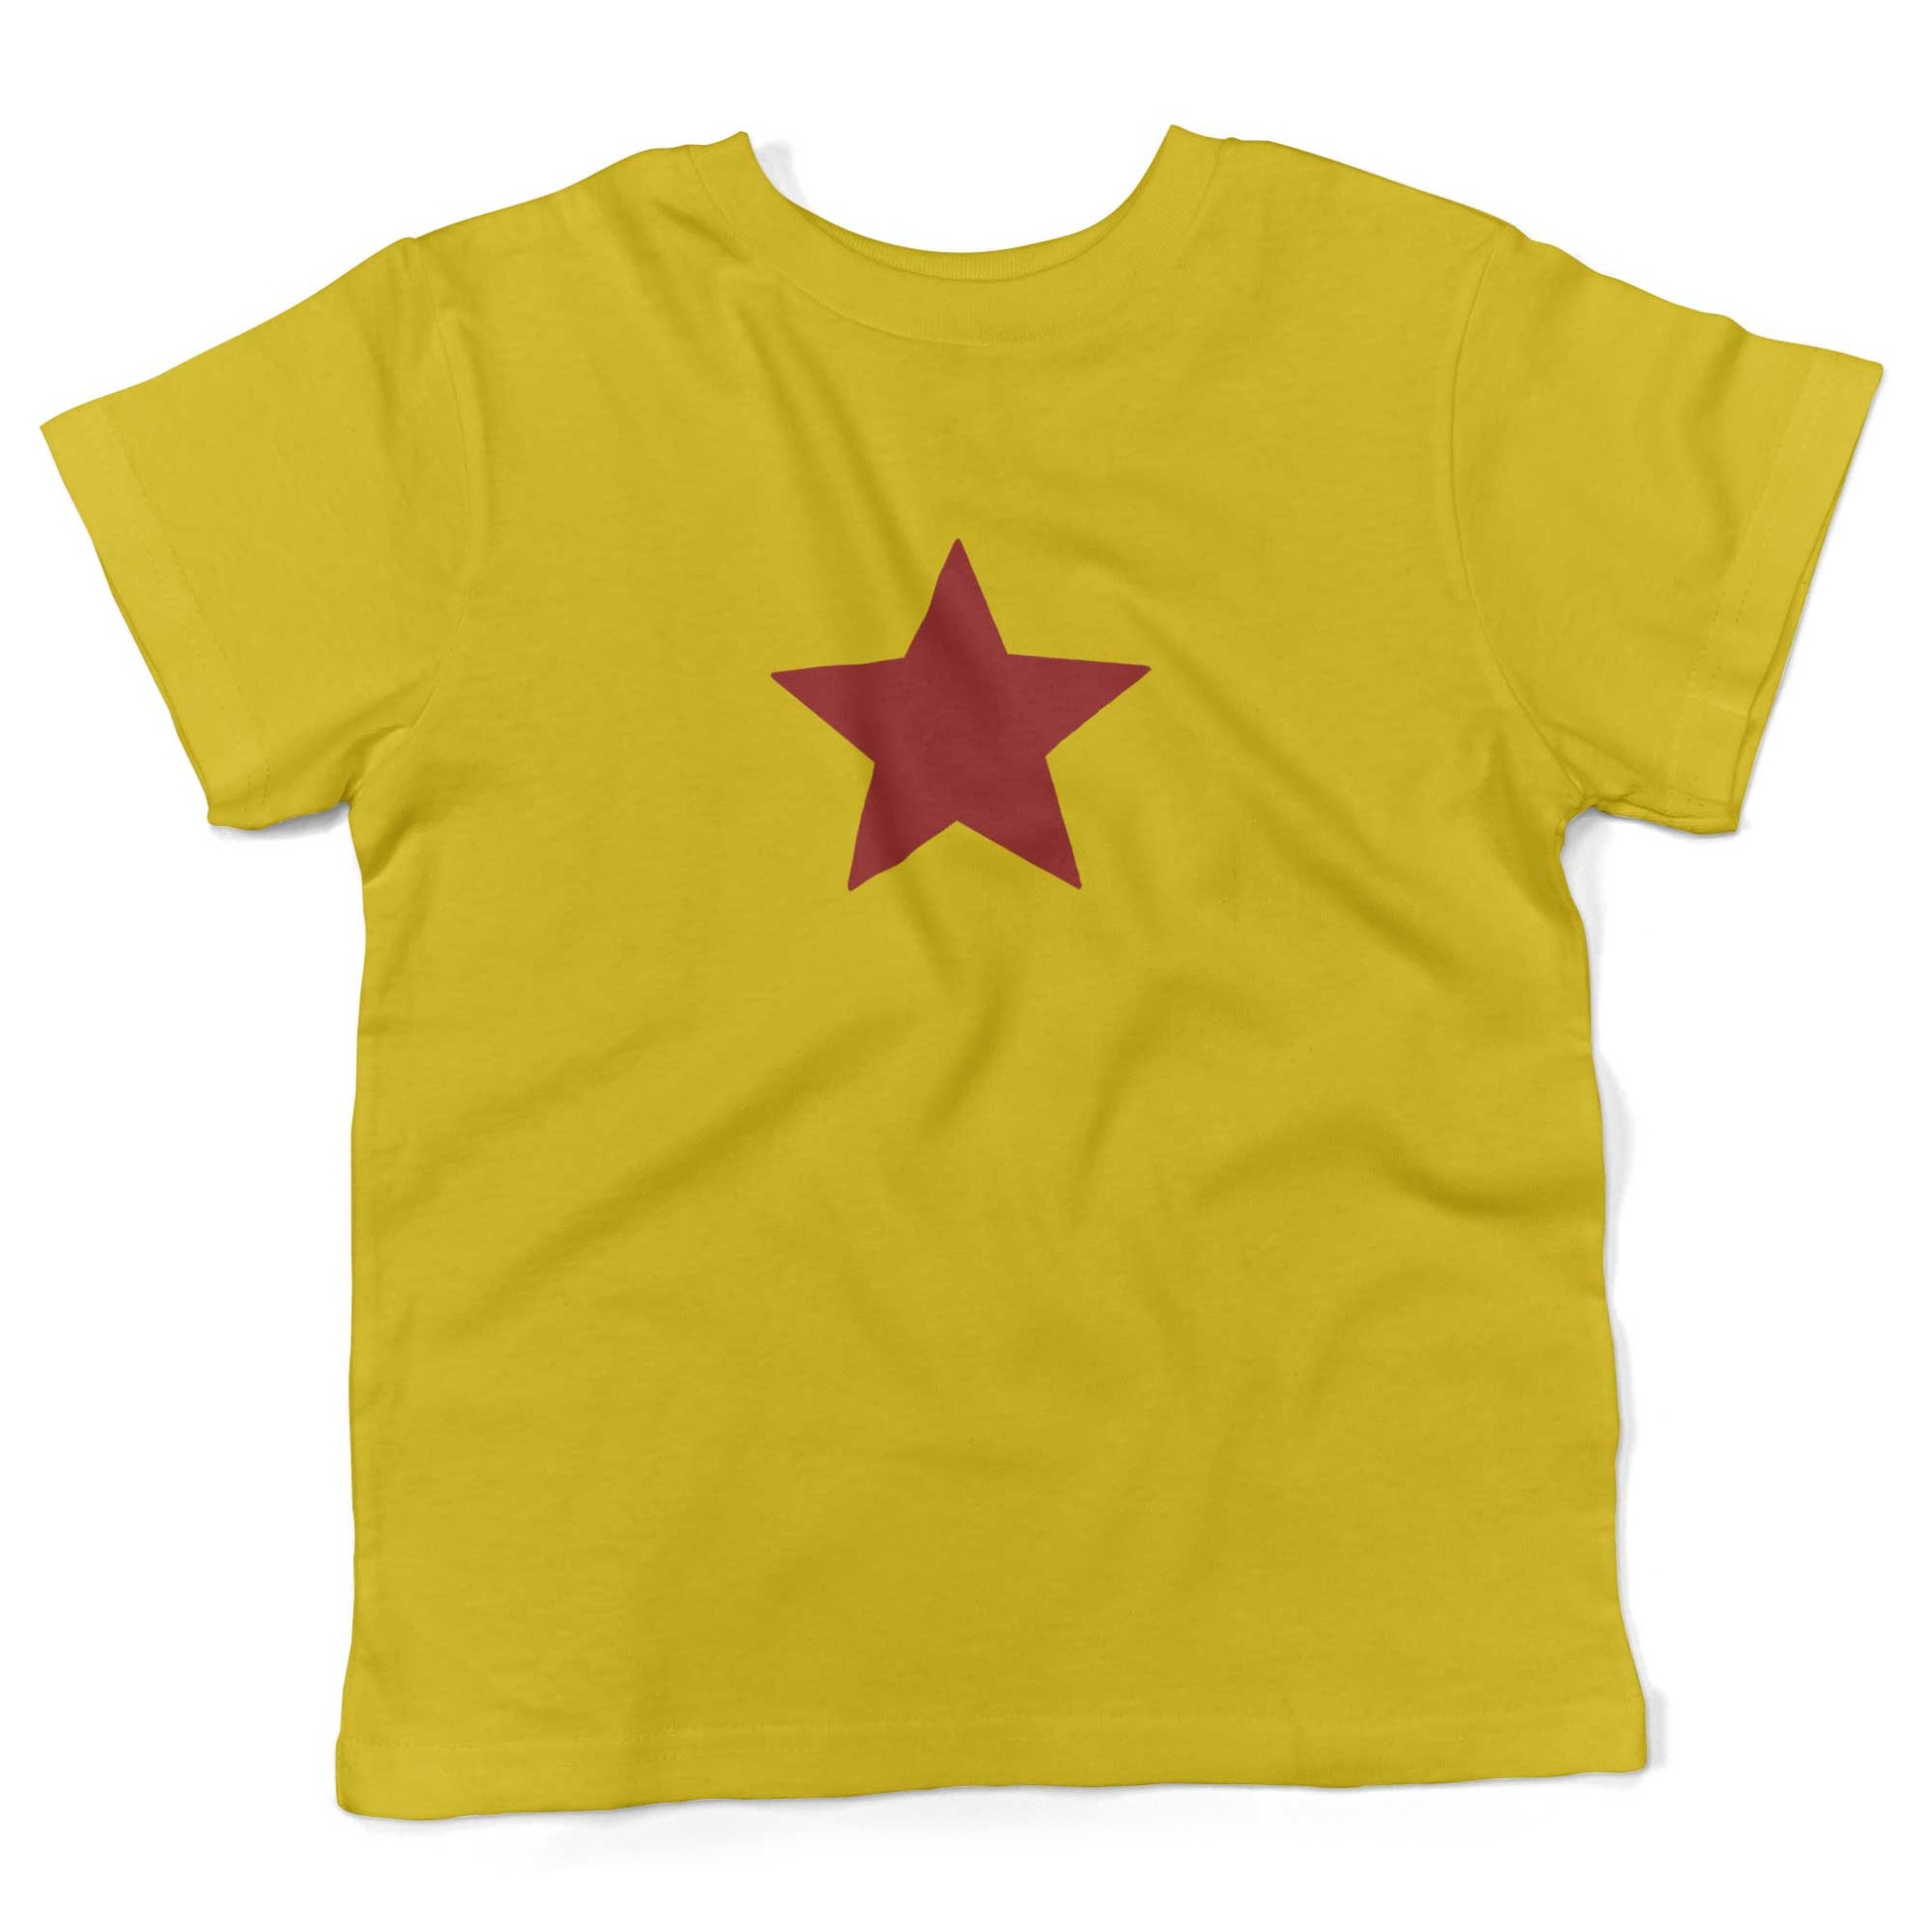 Five-Point Star Toddler Shirt-Sunshine Yellow-Red Star